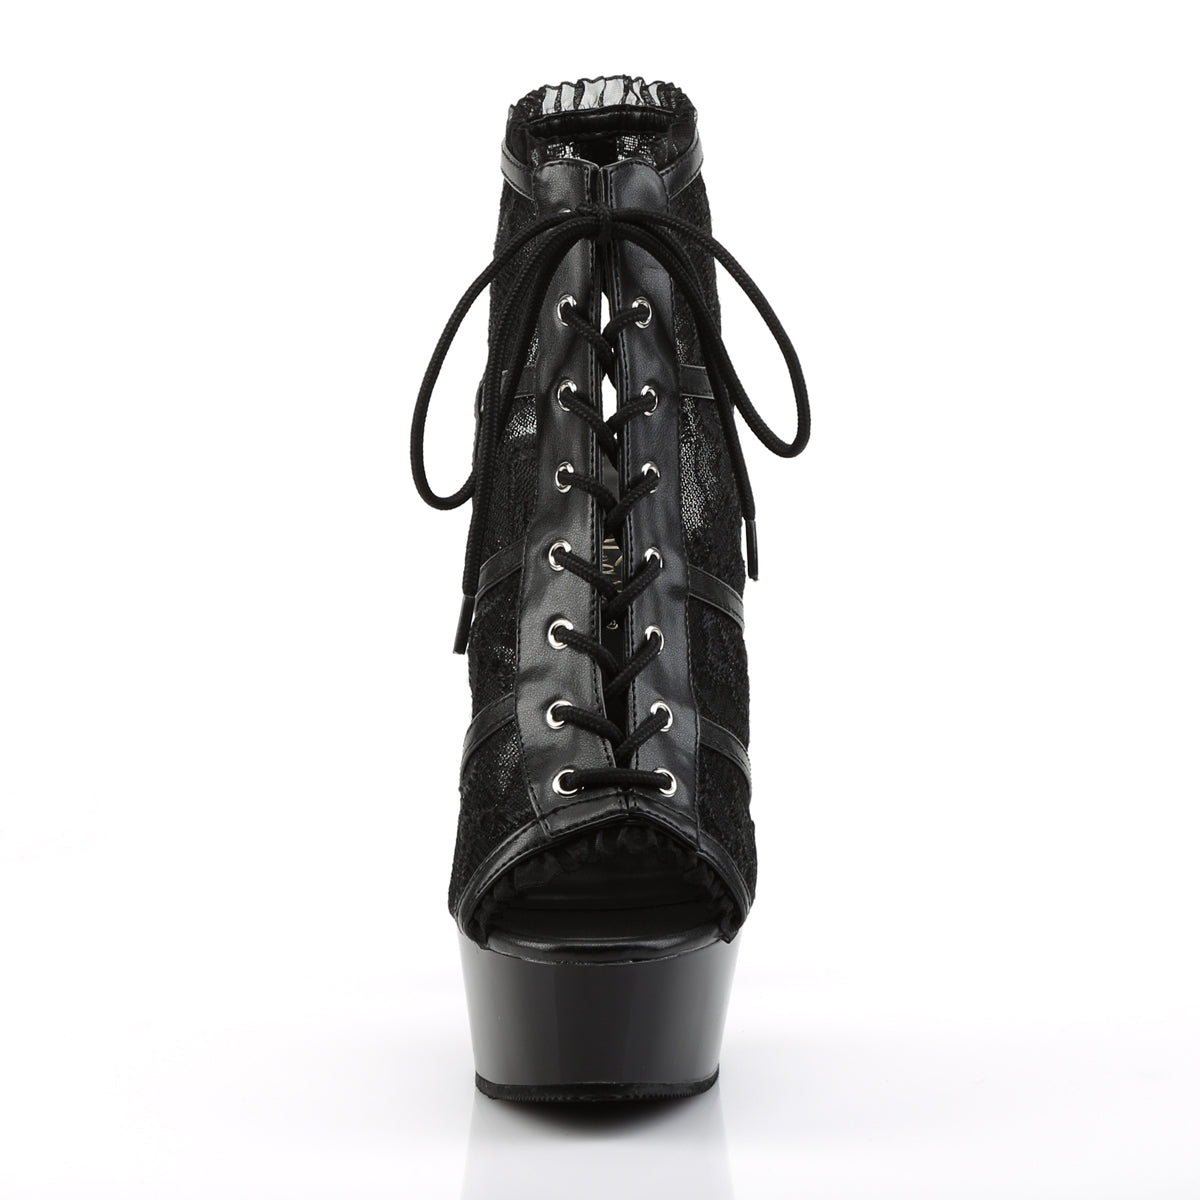 DELIGHT-696LC 6" Heel Black Mesh Pole Dancing Platforms-Pleaser- Sexy Shoes Alternative Footwear